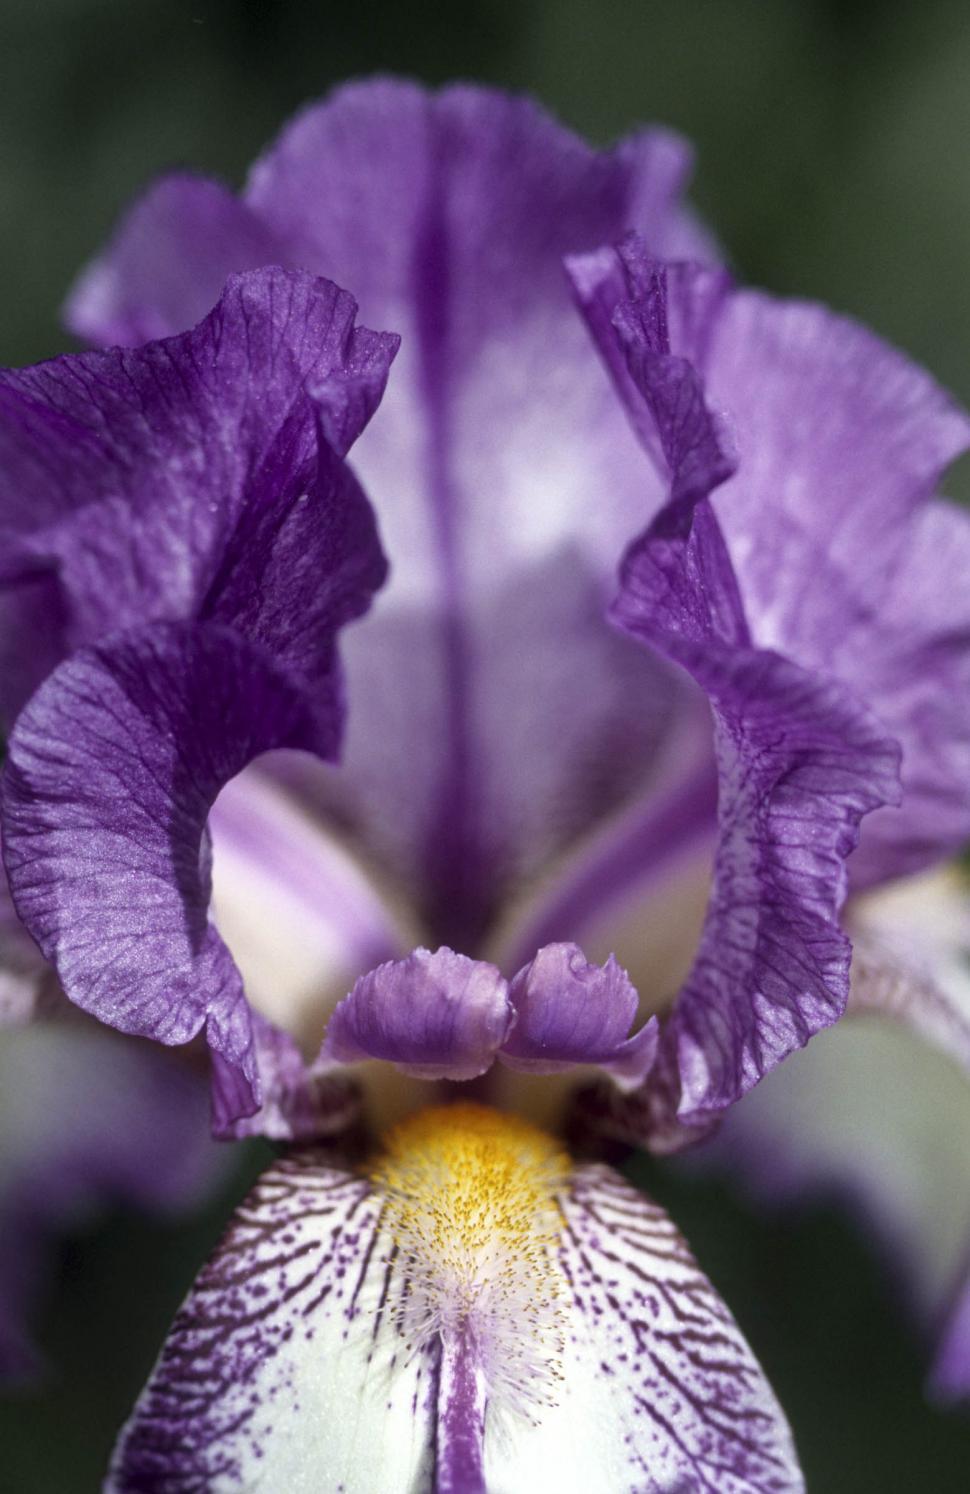 Free Image of purple flowers 